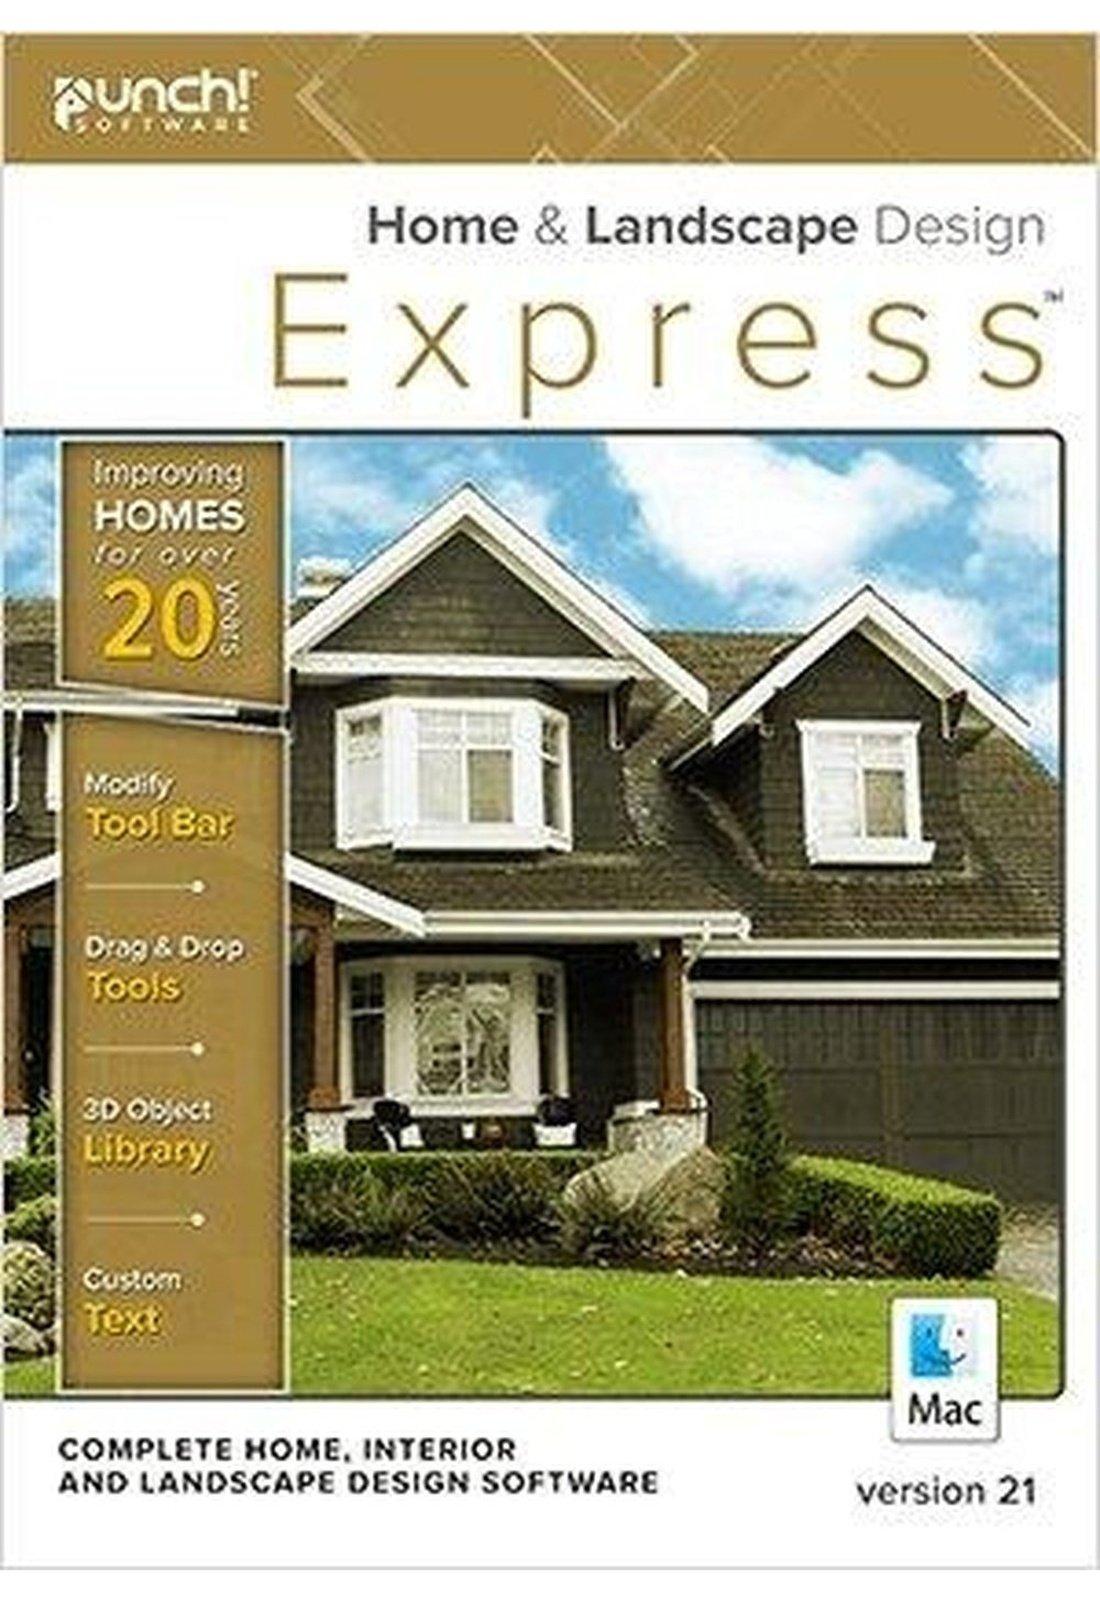 Punch! Home & Landscape Design Express v21 - Instant Download for Mac (1 Computer) - SoftwareCW - Authorized Reseller